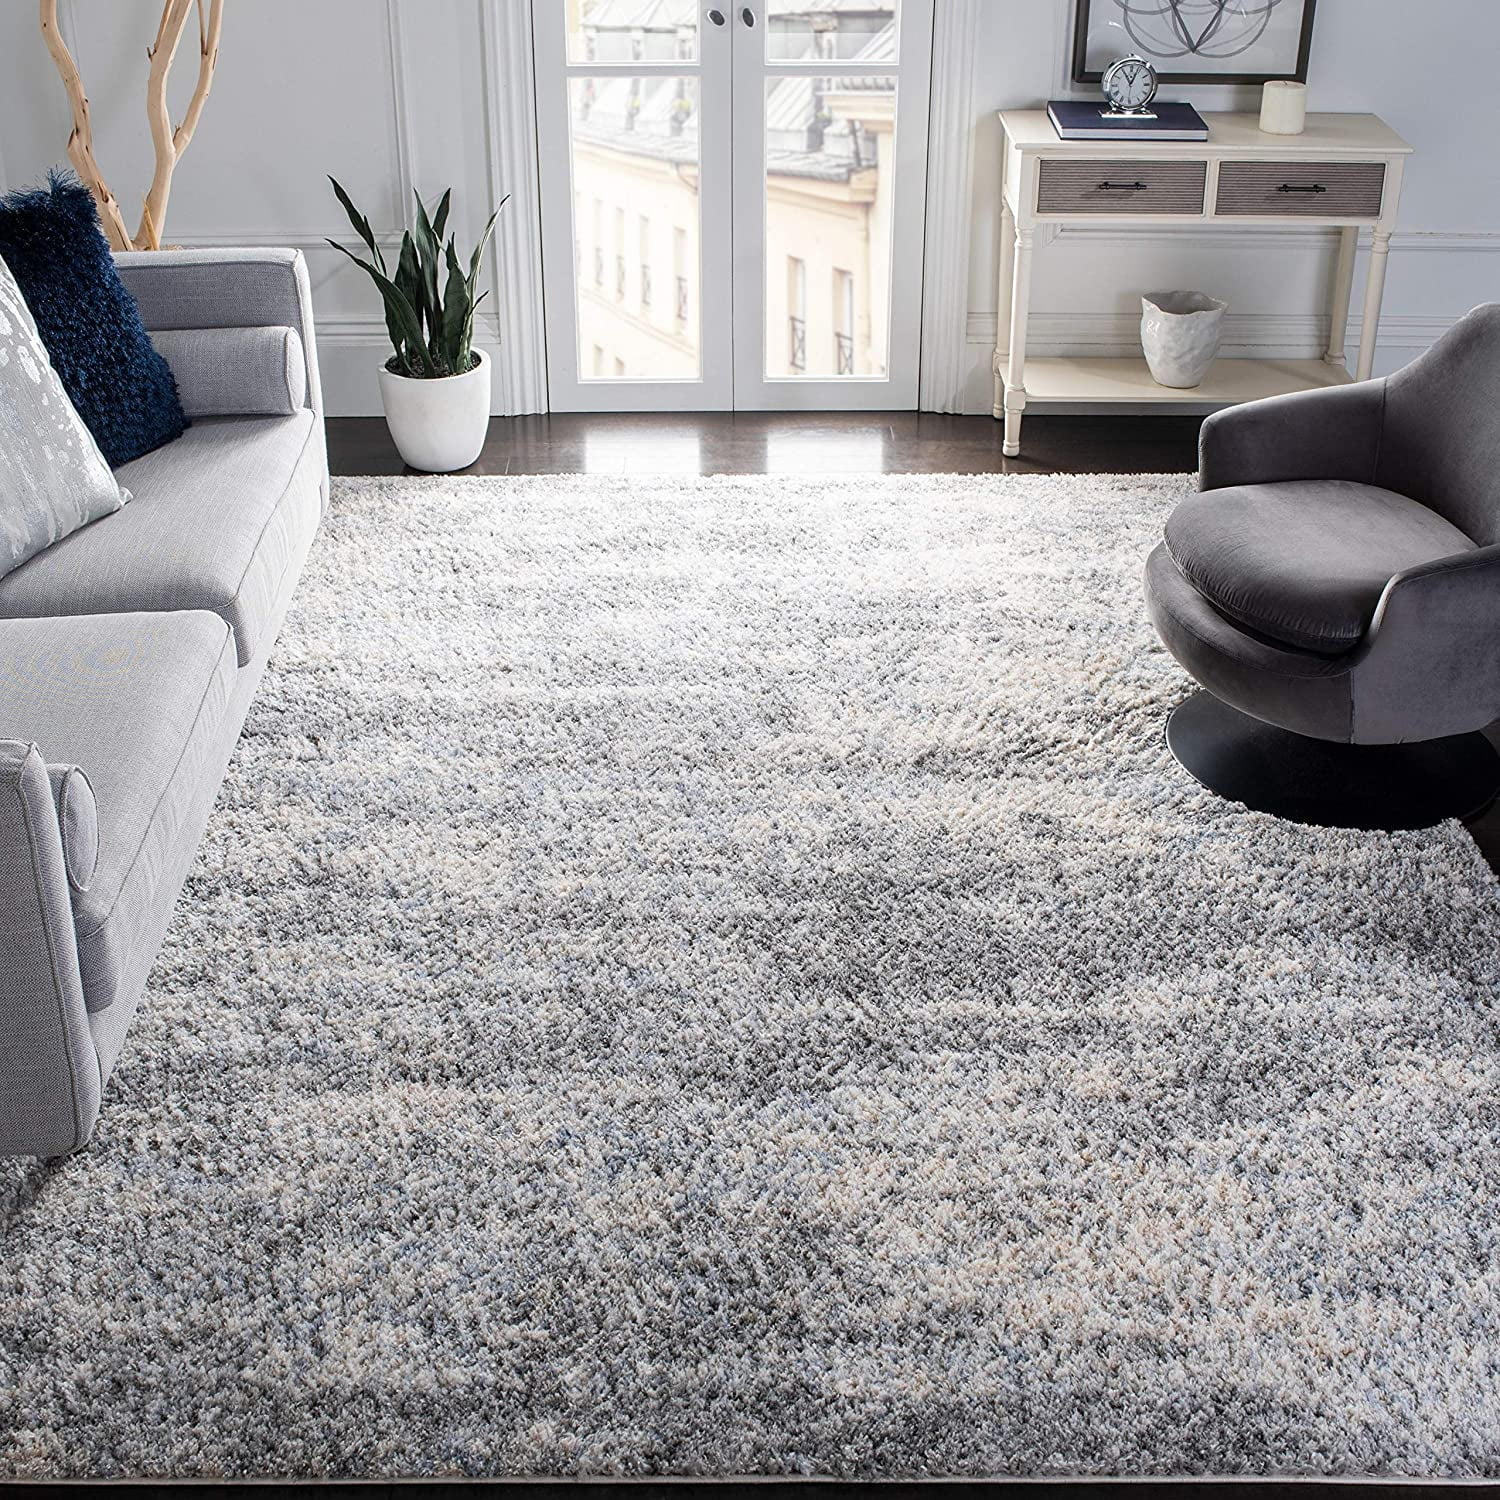 Details about   Living Room Carpet Bedoom Washable Non-slip Rug Modern Printing Geometric Floor 